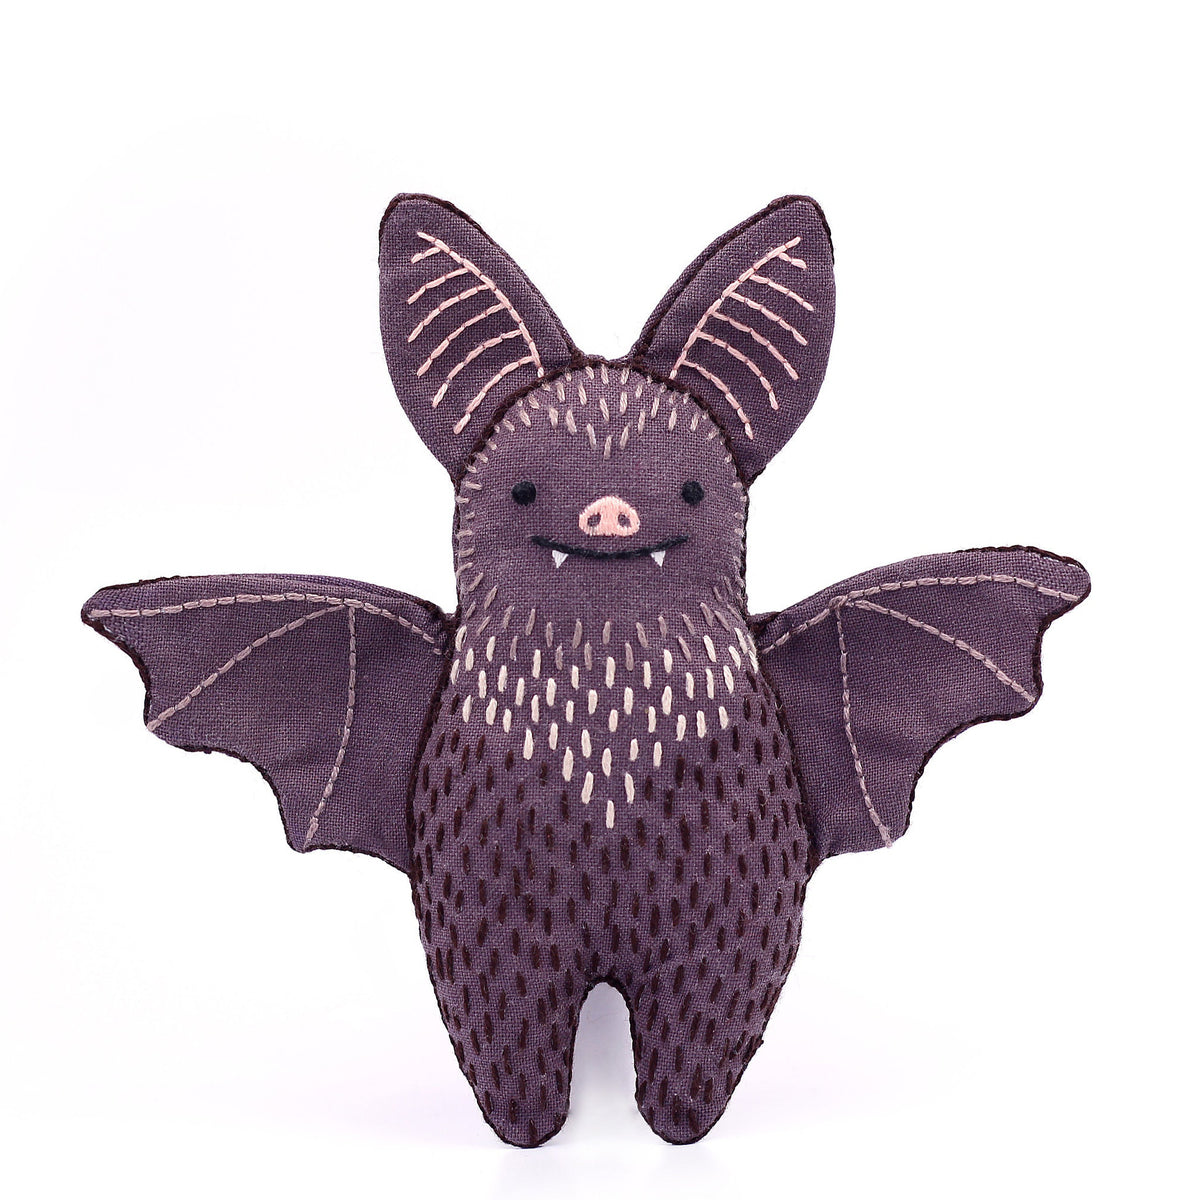 Hand Embroidered Plushie Doll Kit - Bat